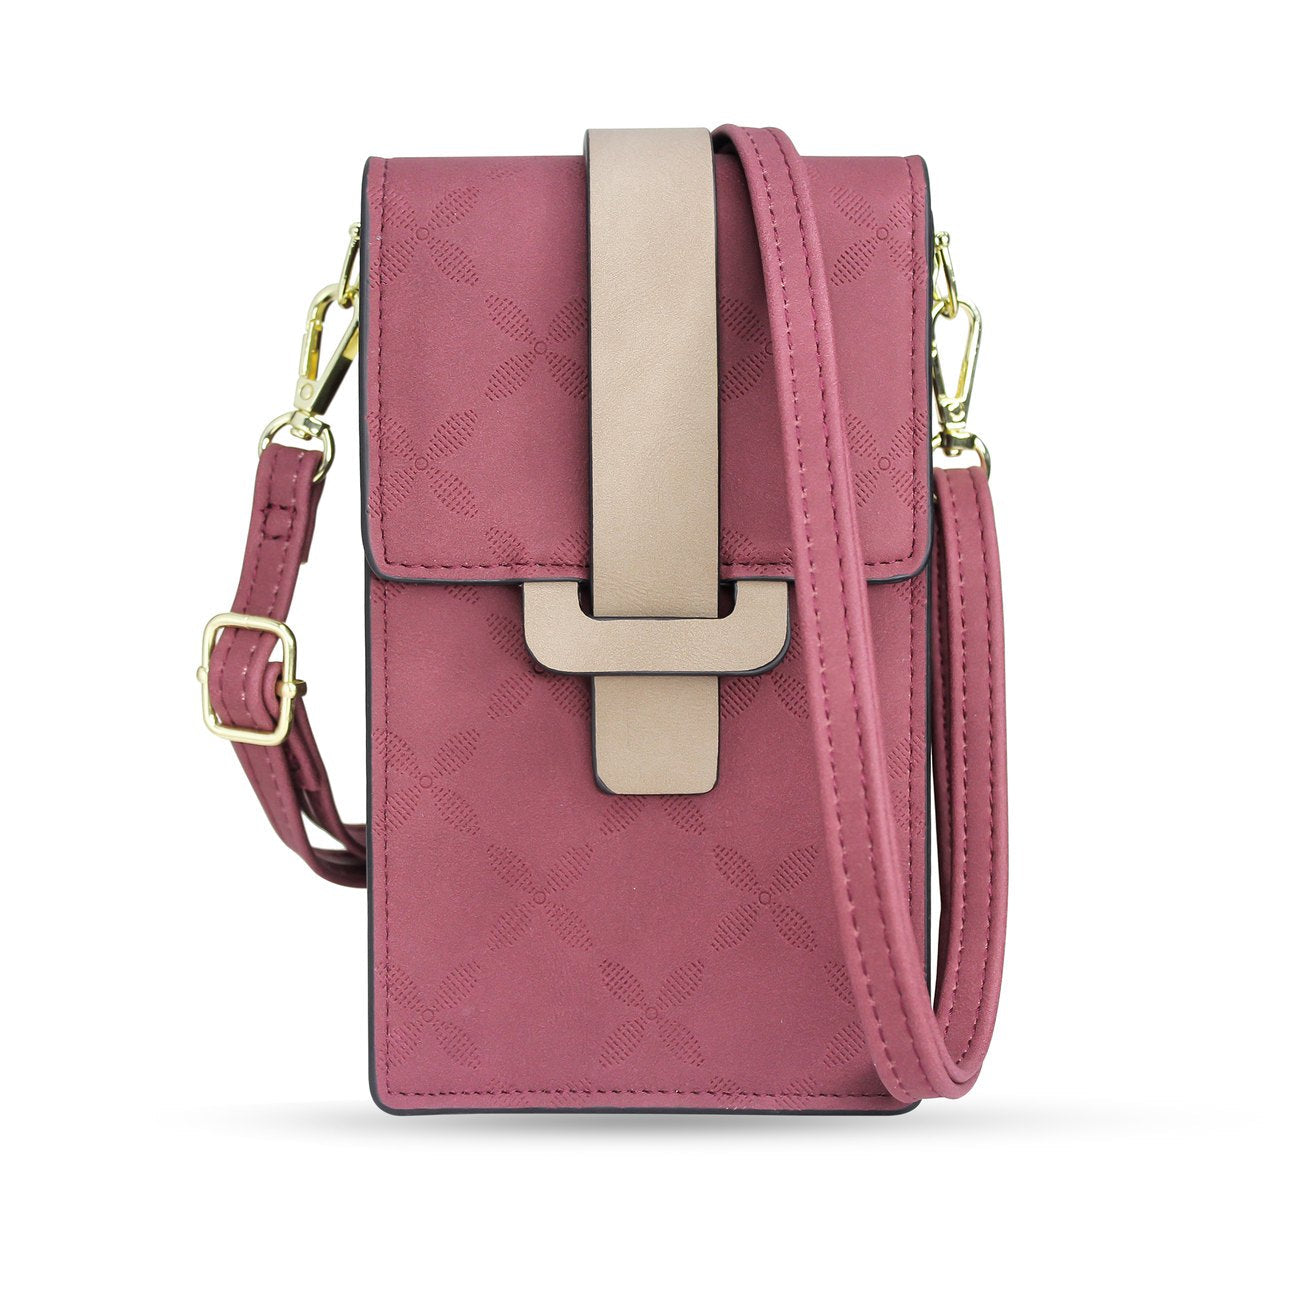 Fancy Bag Case Handmade Pouch High Quality Bag Smartphone Purse with Shoulder Strap Wallet Dark Pink (Model 1)